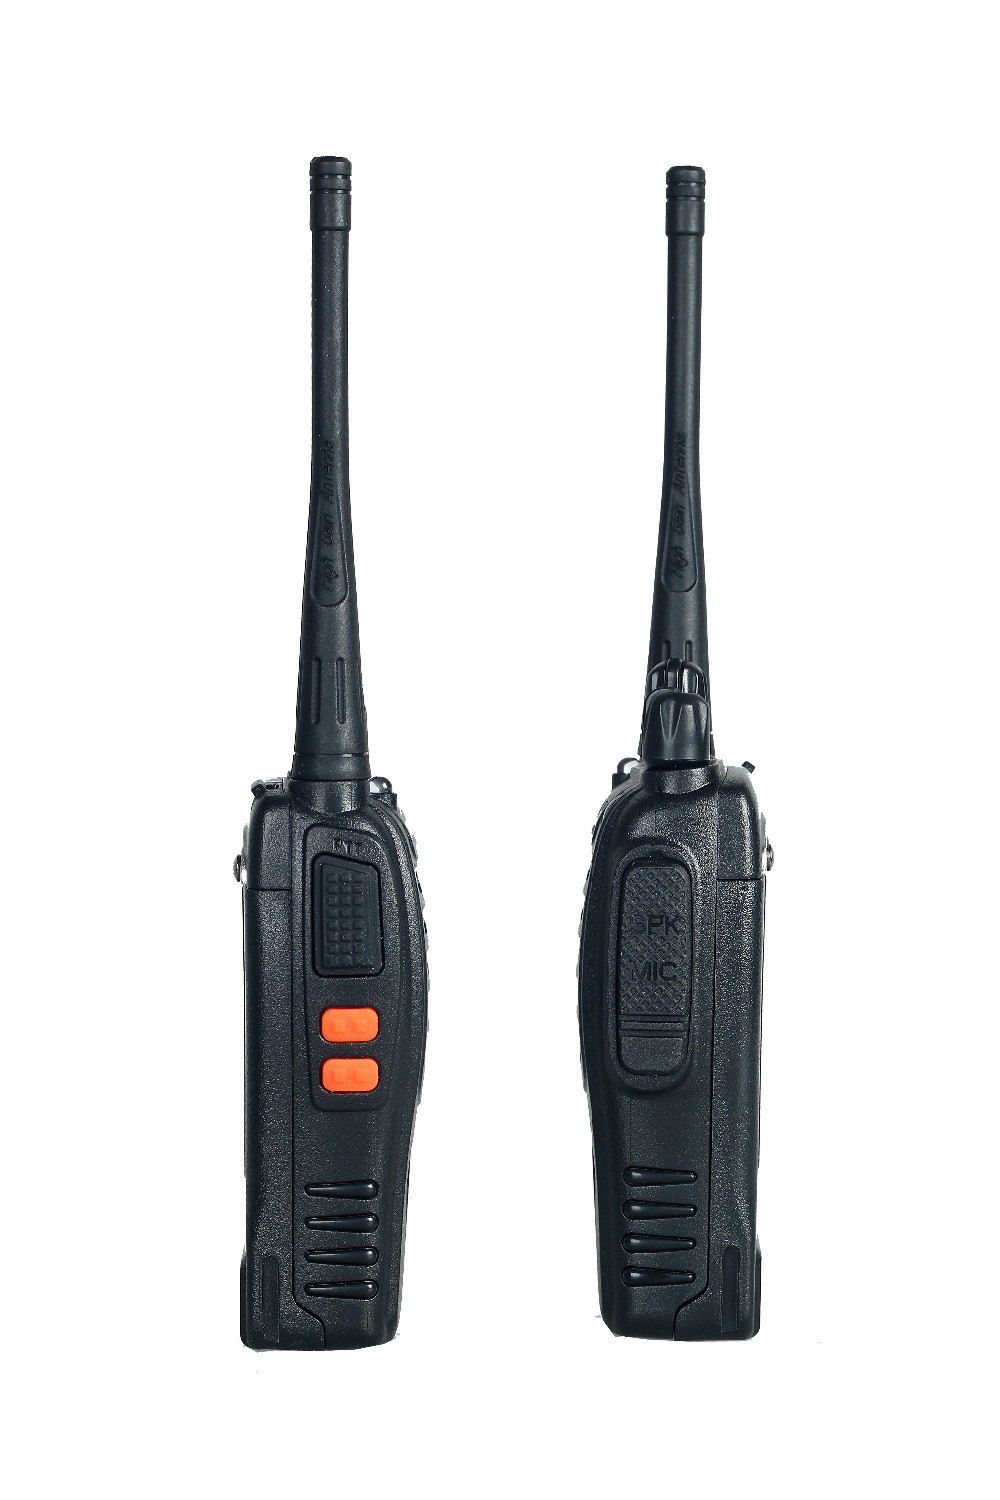 2PCS-Dual-Band-Two-Way-Radio-Baofeng-BF-888S-Walkie-Talkie-5W-Handheld-Pofung-bf-888s (2)